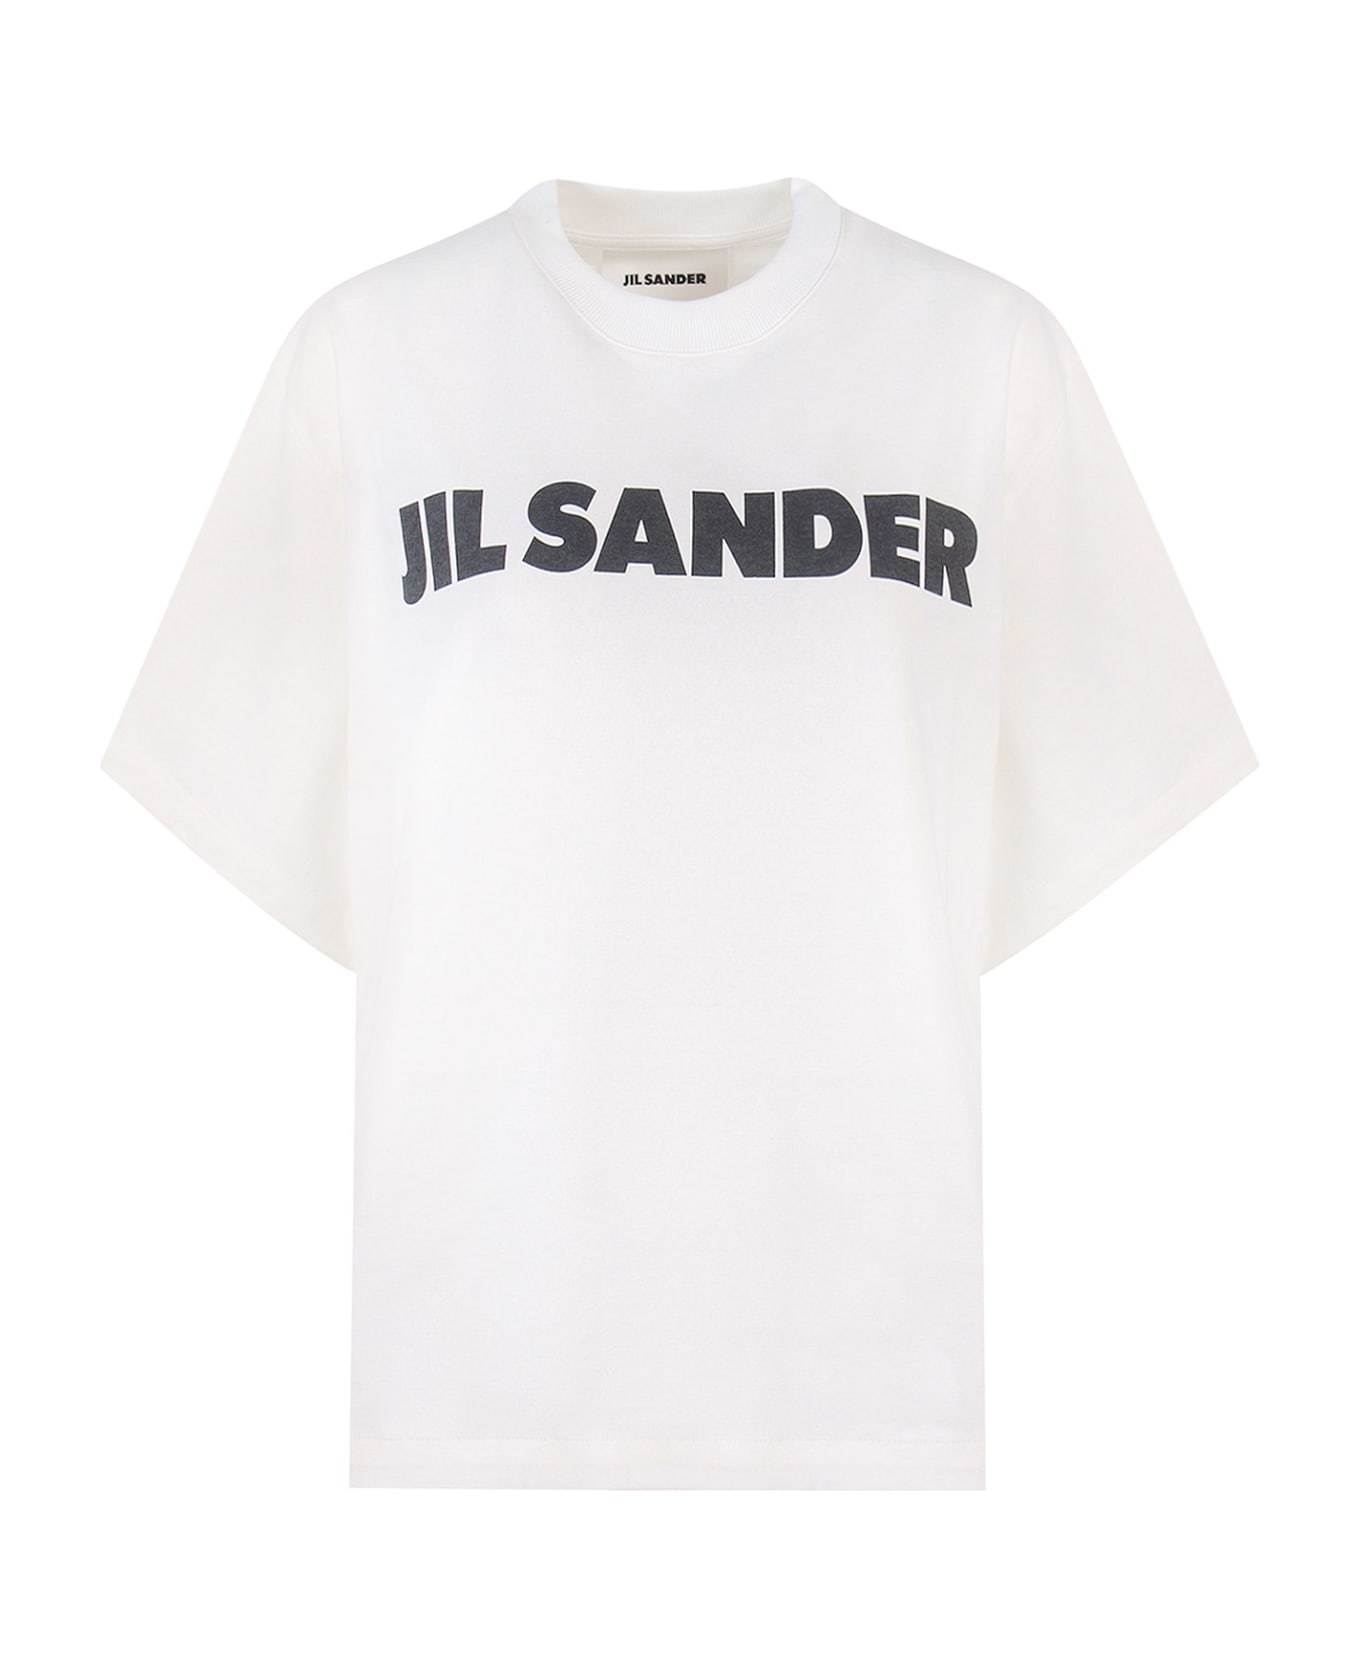 Jil Sander T-shirt - WHITE/BLACK